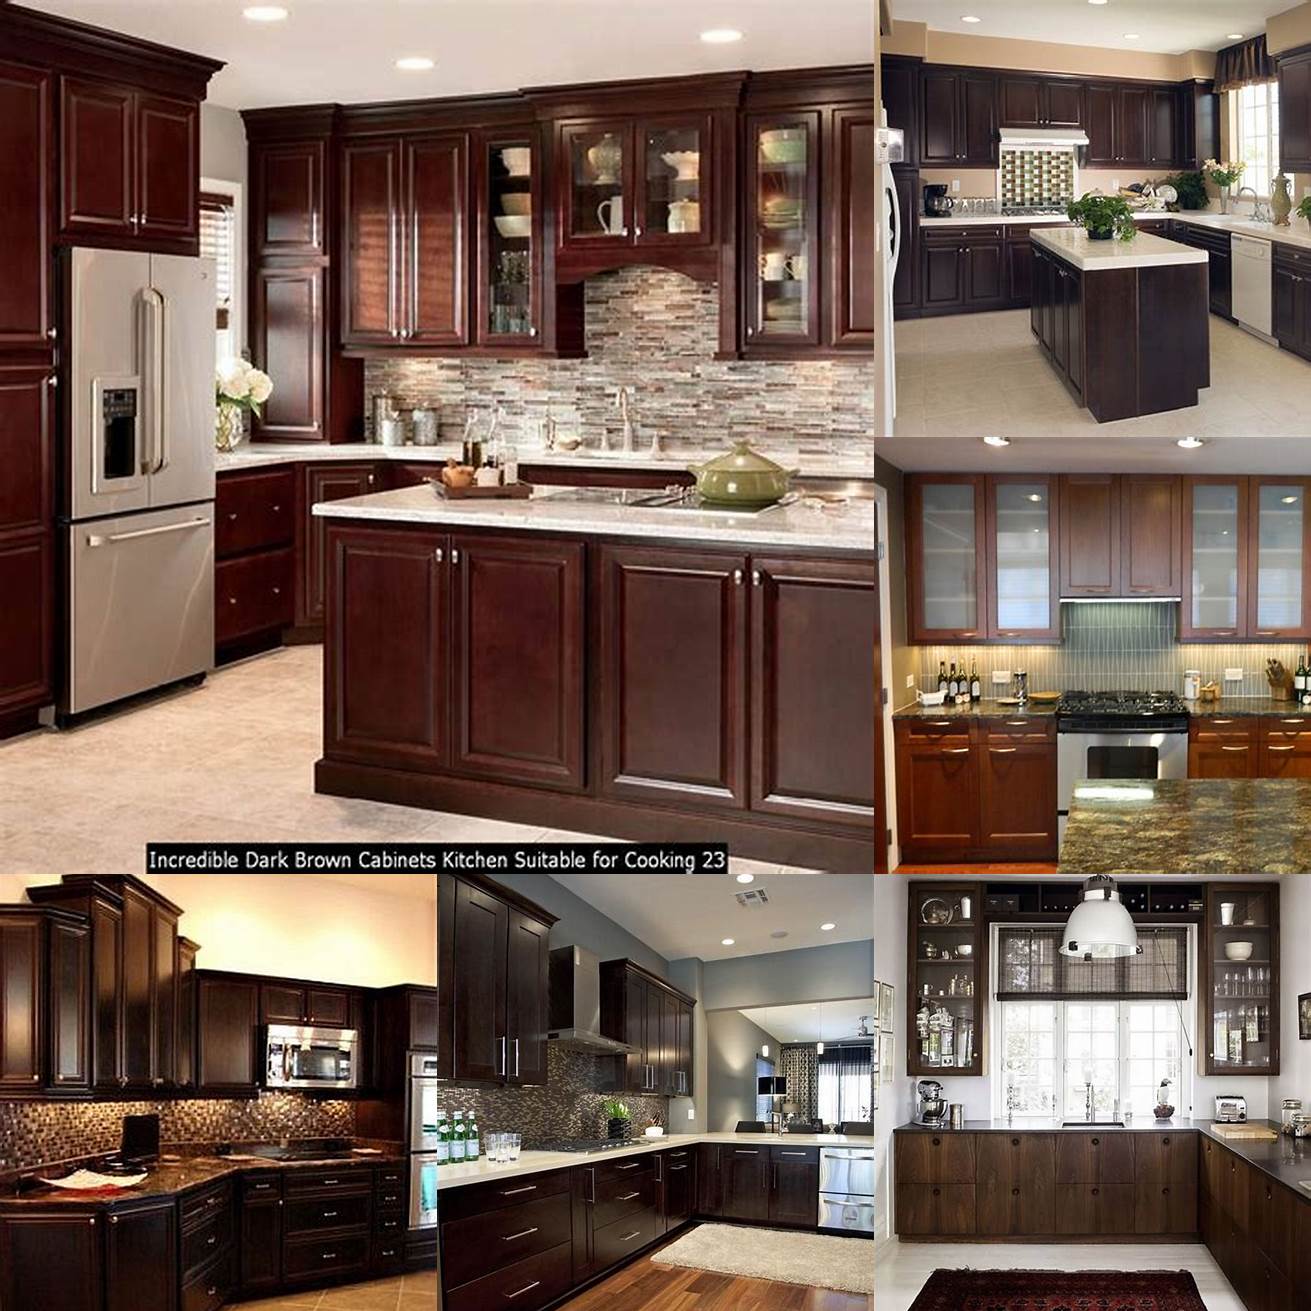 Dark brown kitchen cabinets with glass cabinet doors